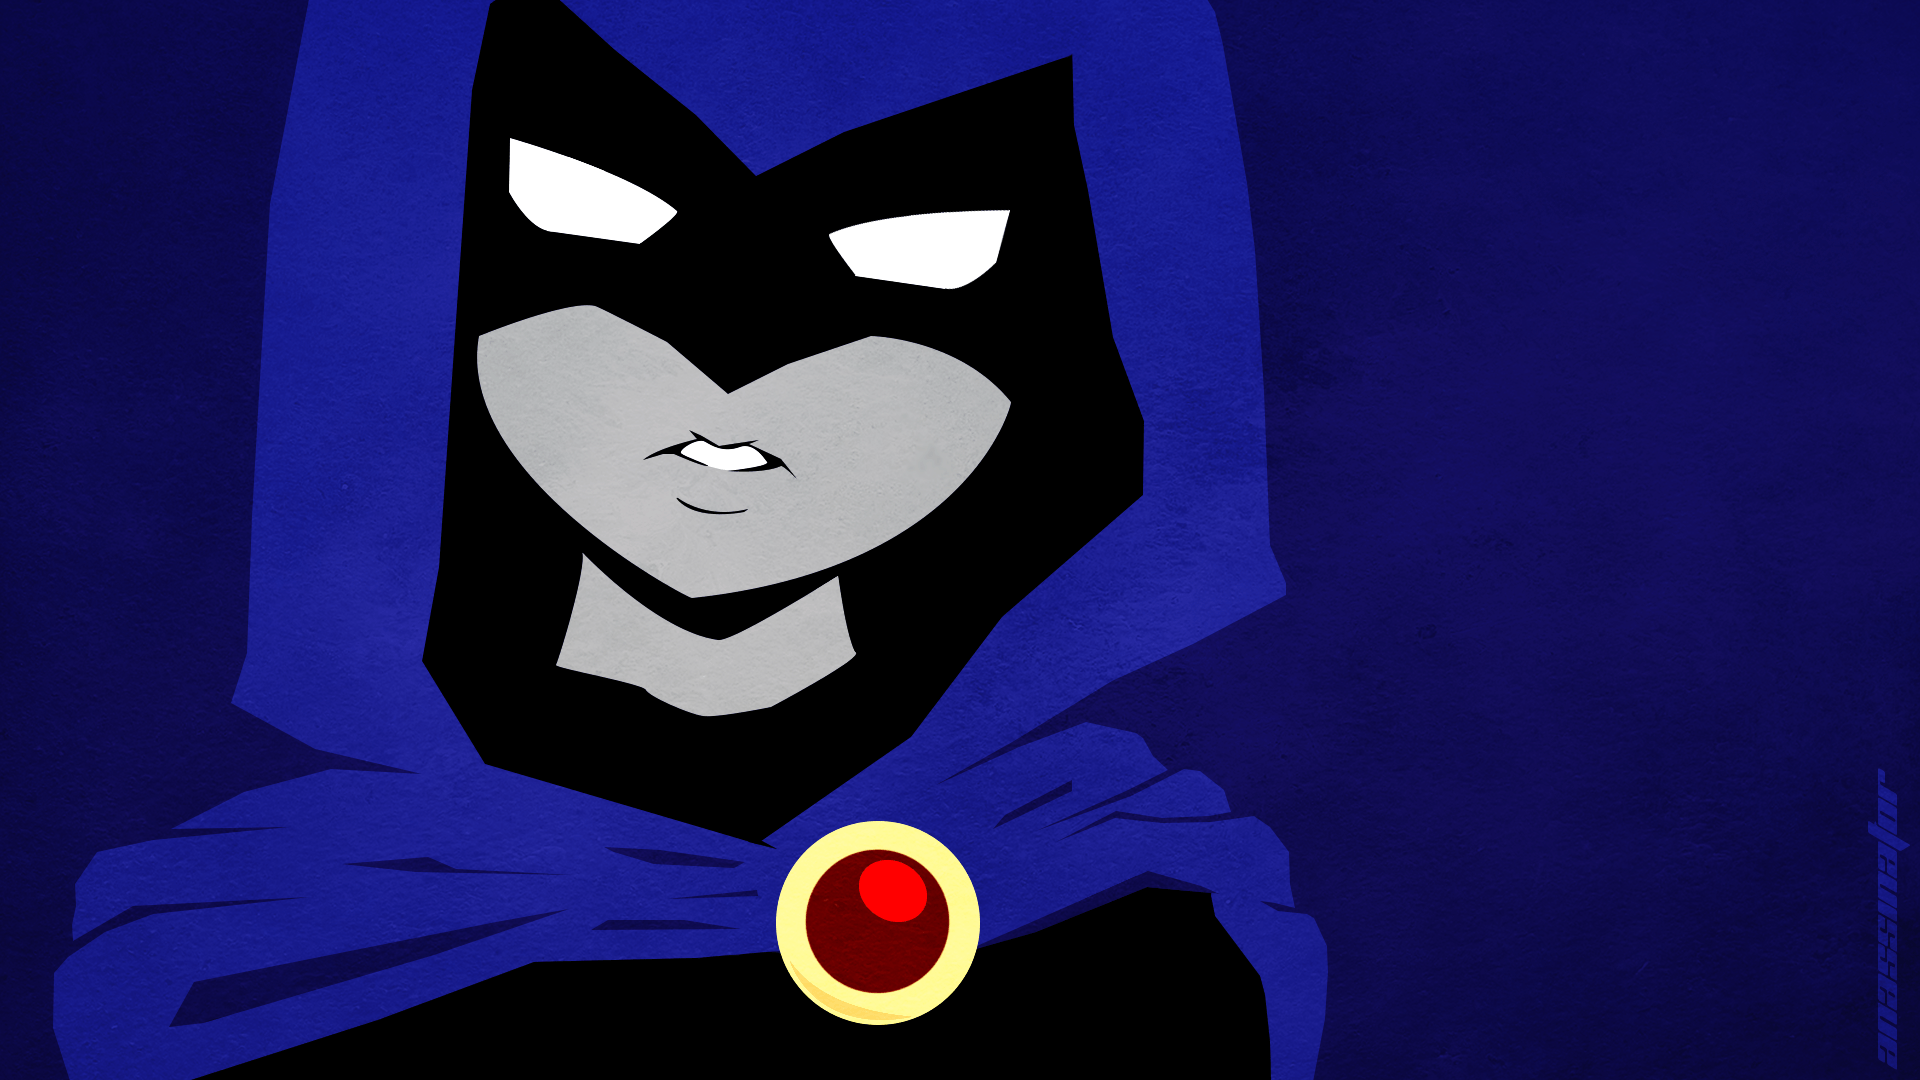 Wallpaper, illustration, cartoon, Teen Titans, Raven character